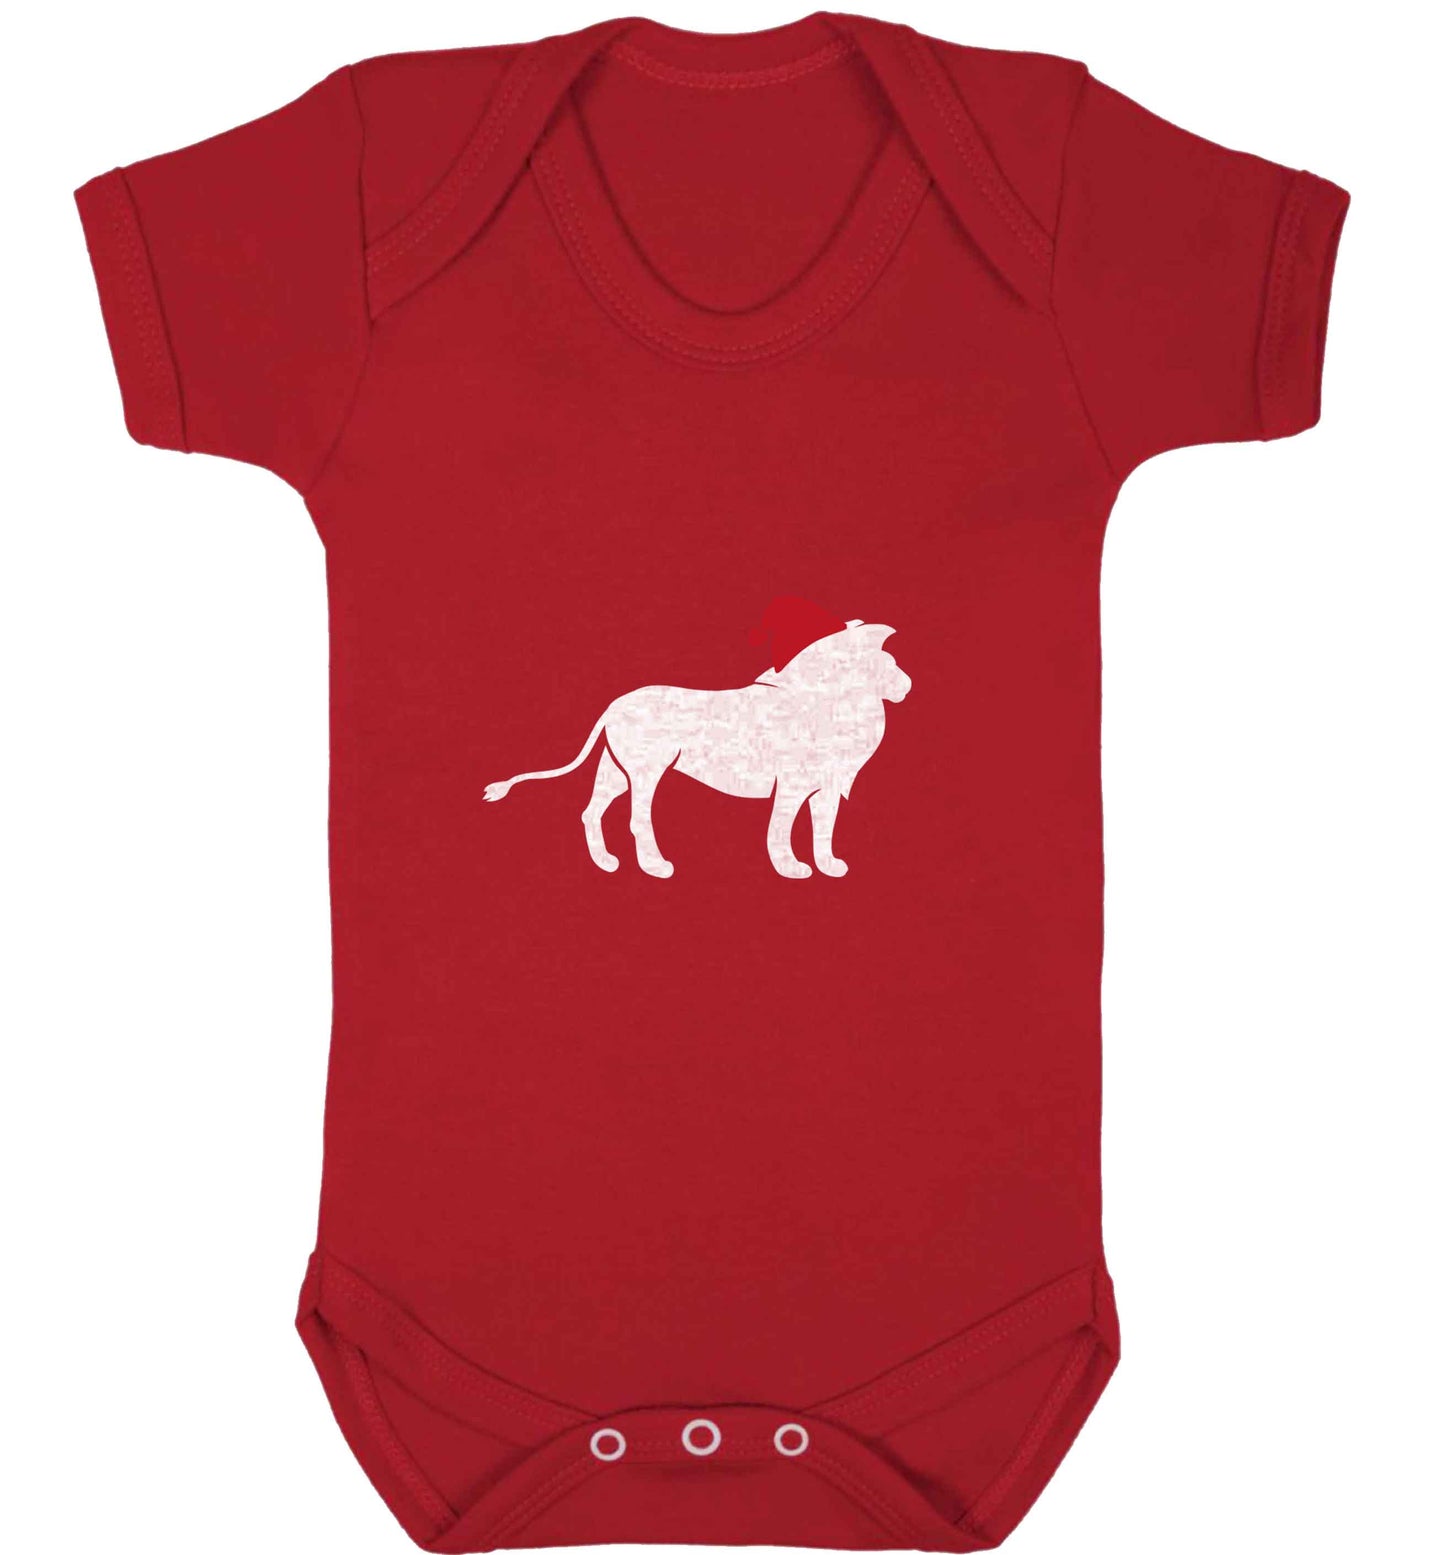 Gold lion santa baby vest red 18-24 months